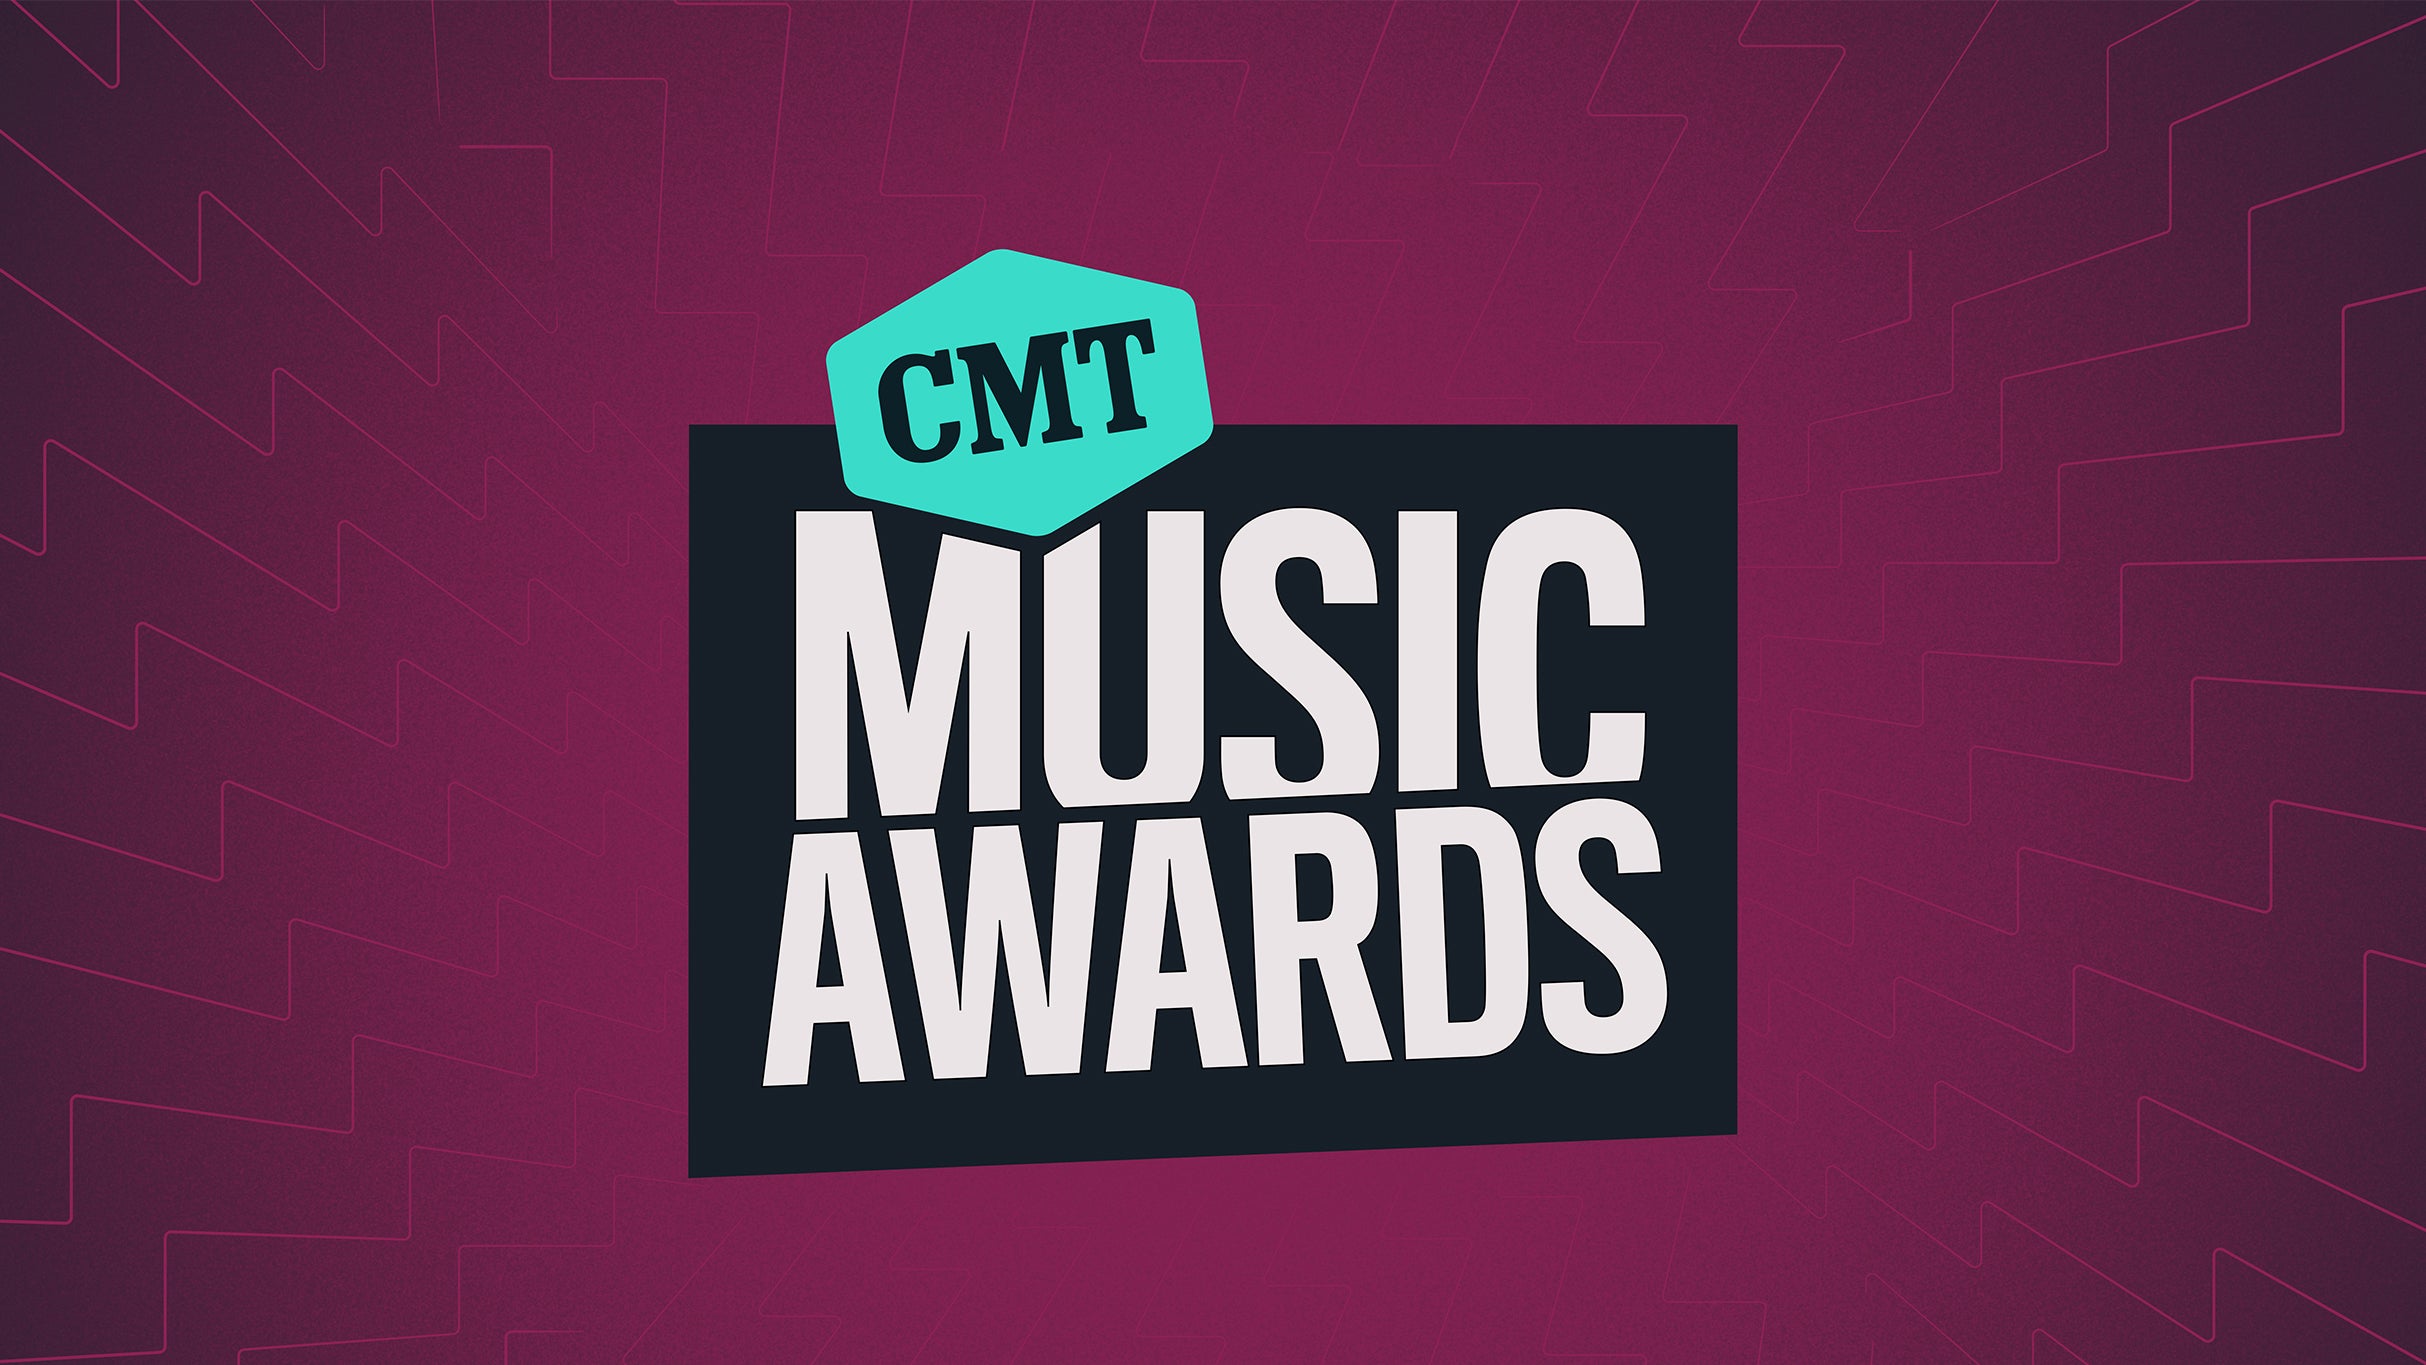 CMT Music Awards free pre-sale c0de